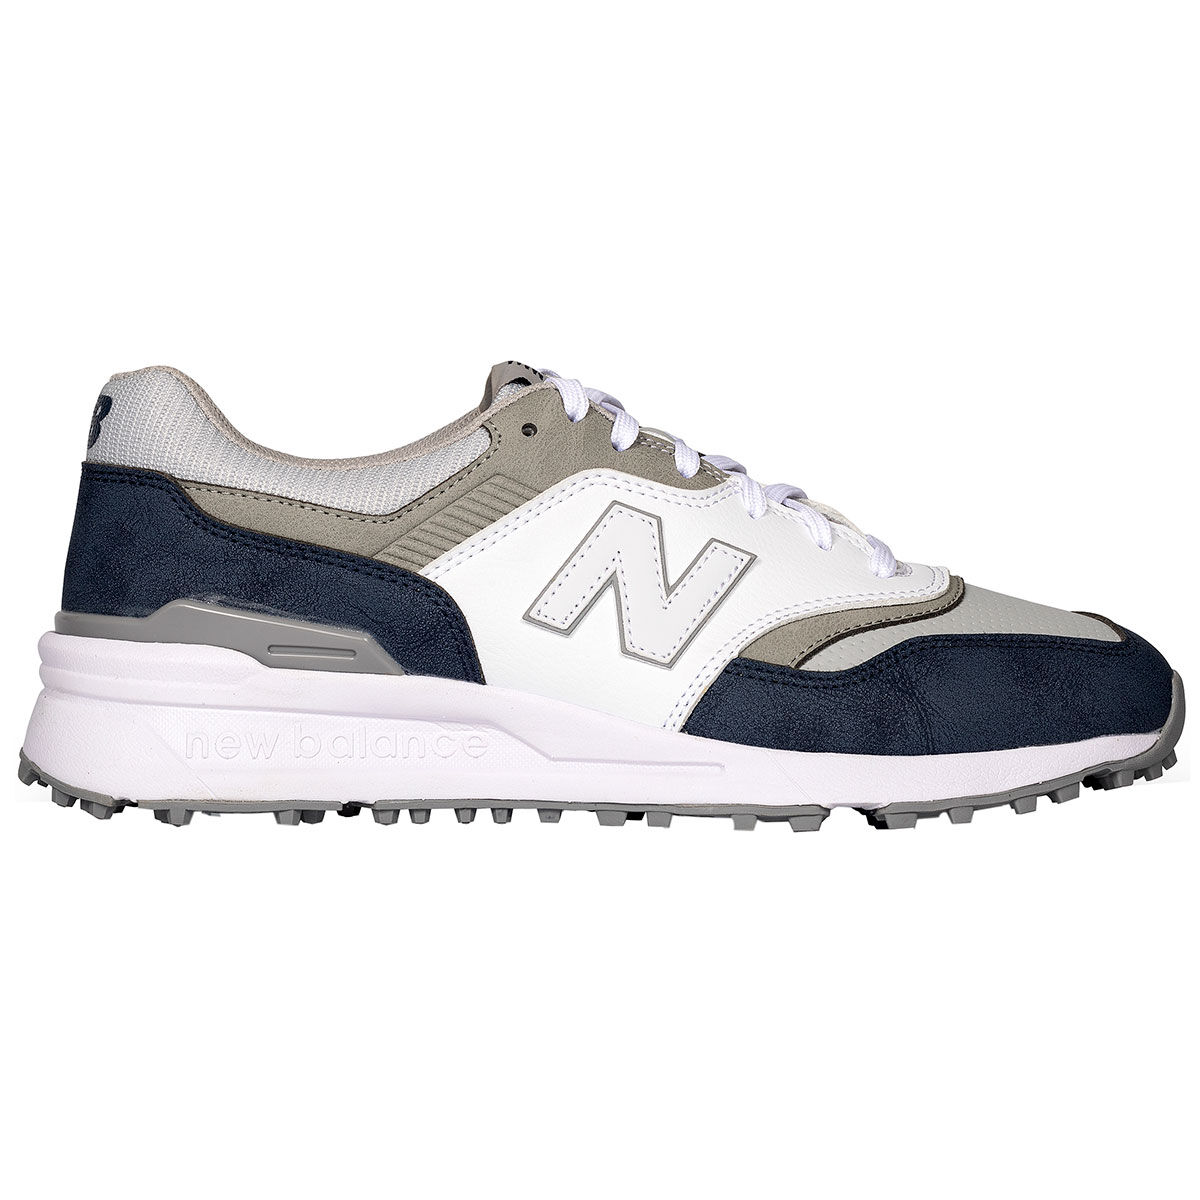 New Balance Men’s 997 Waterproof Spikeless Golf Shoes, Mens, White/navy, 7 | American Golf